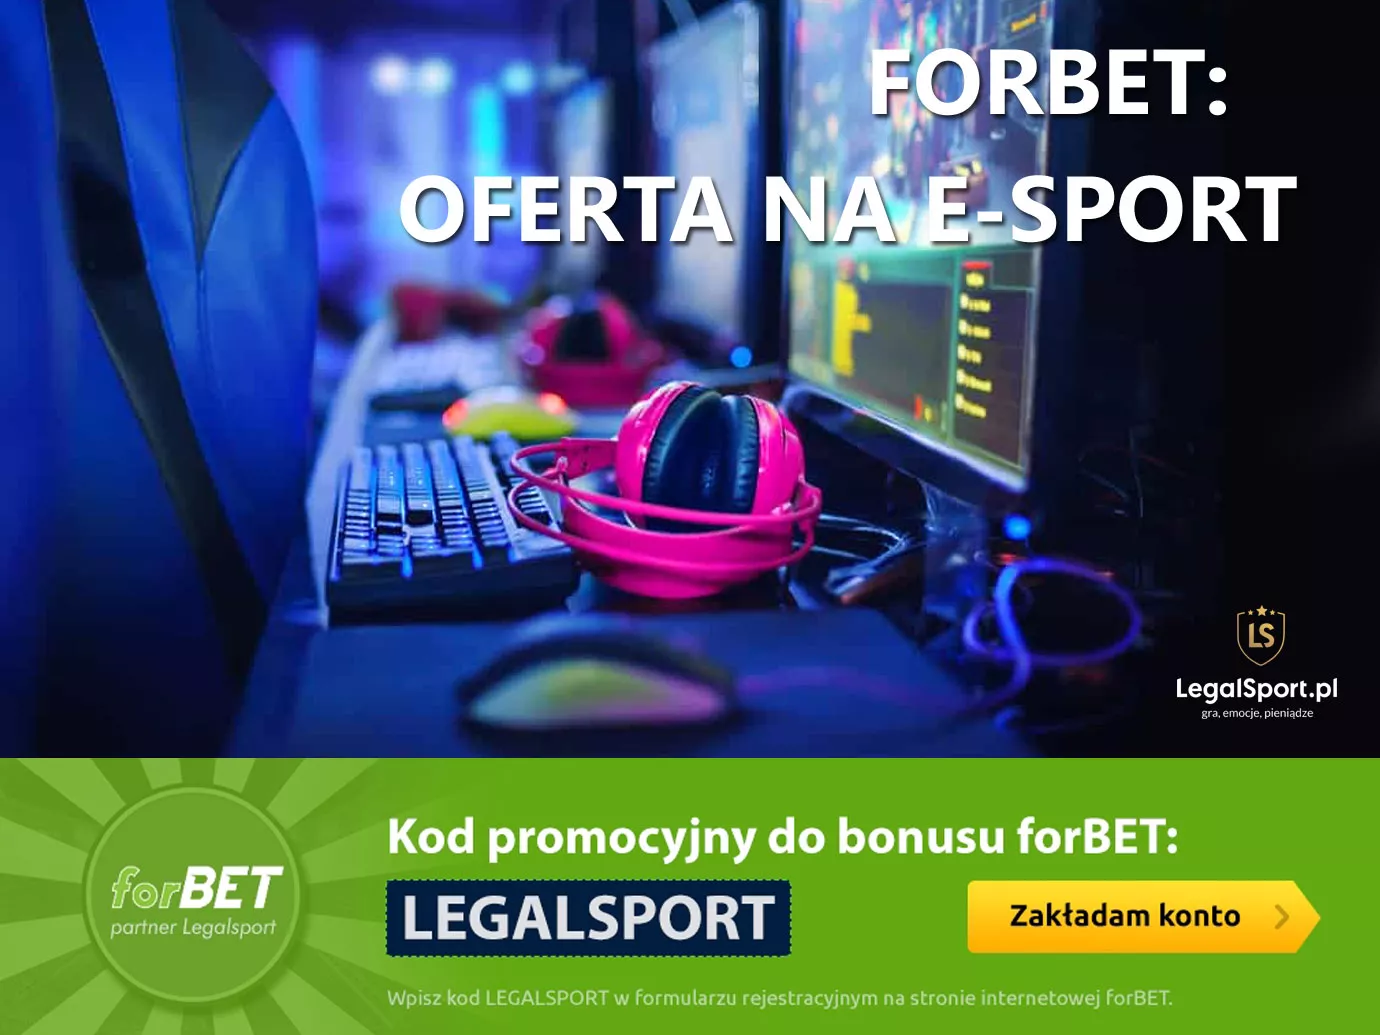 Oferta na e-sport w forBET